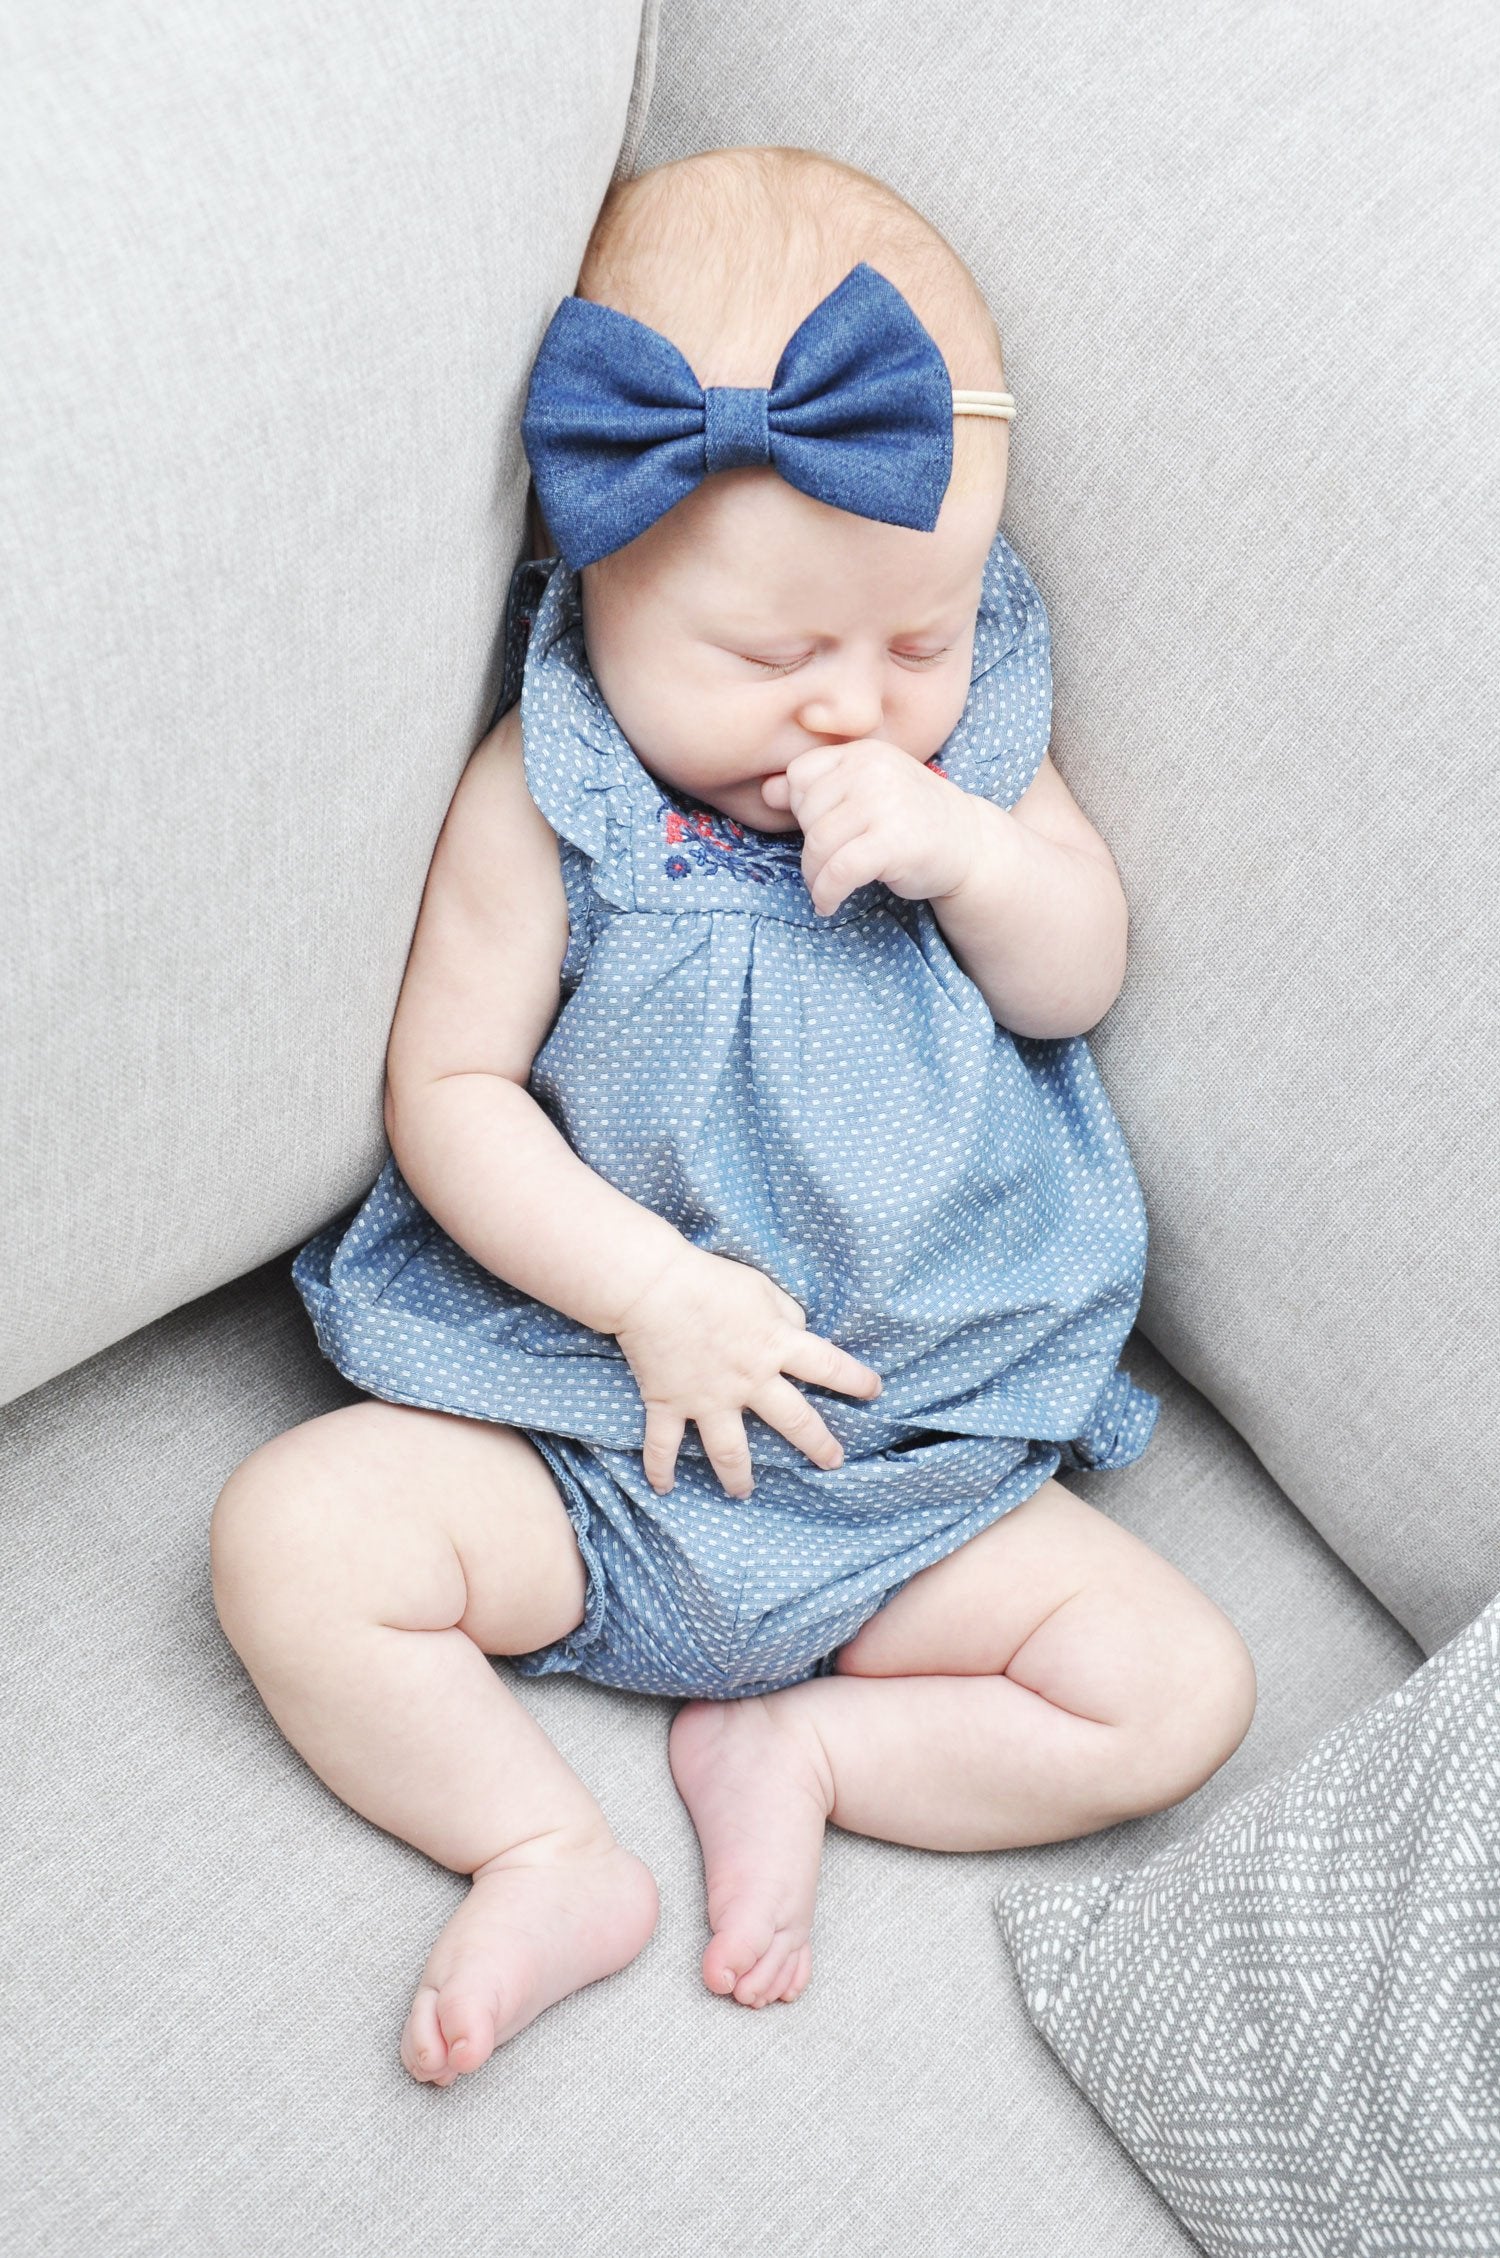 Infant Headband - Big Blue Denim Bow Baby Wisp